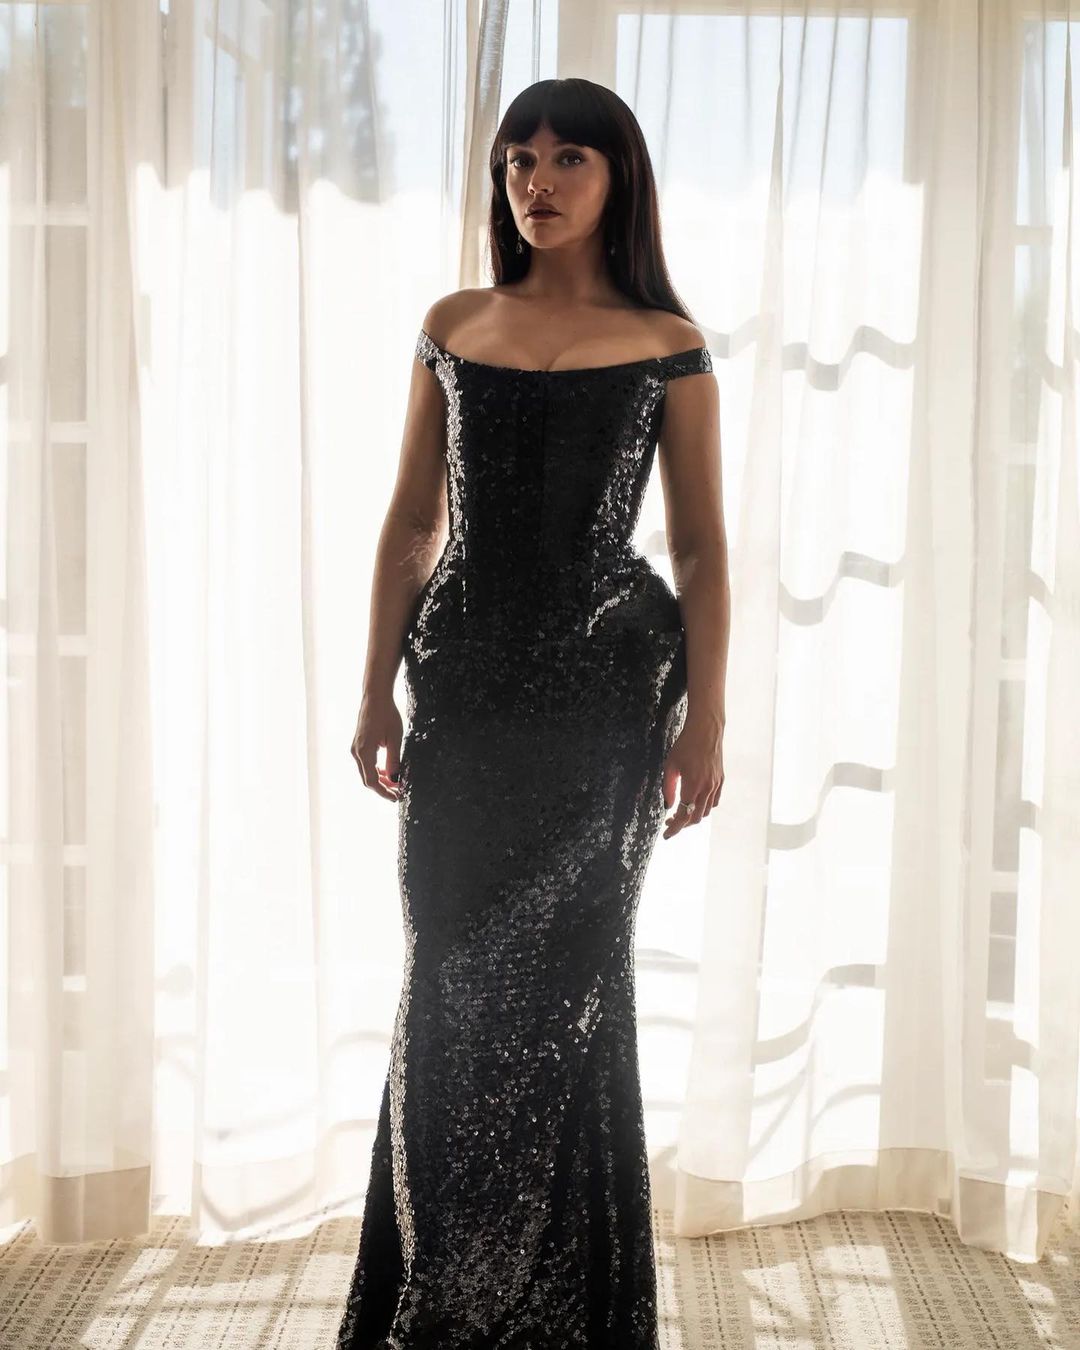 Bossy Babe Olivia In Sparkling Black Off-Shoulder Sequin Gown